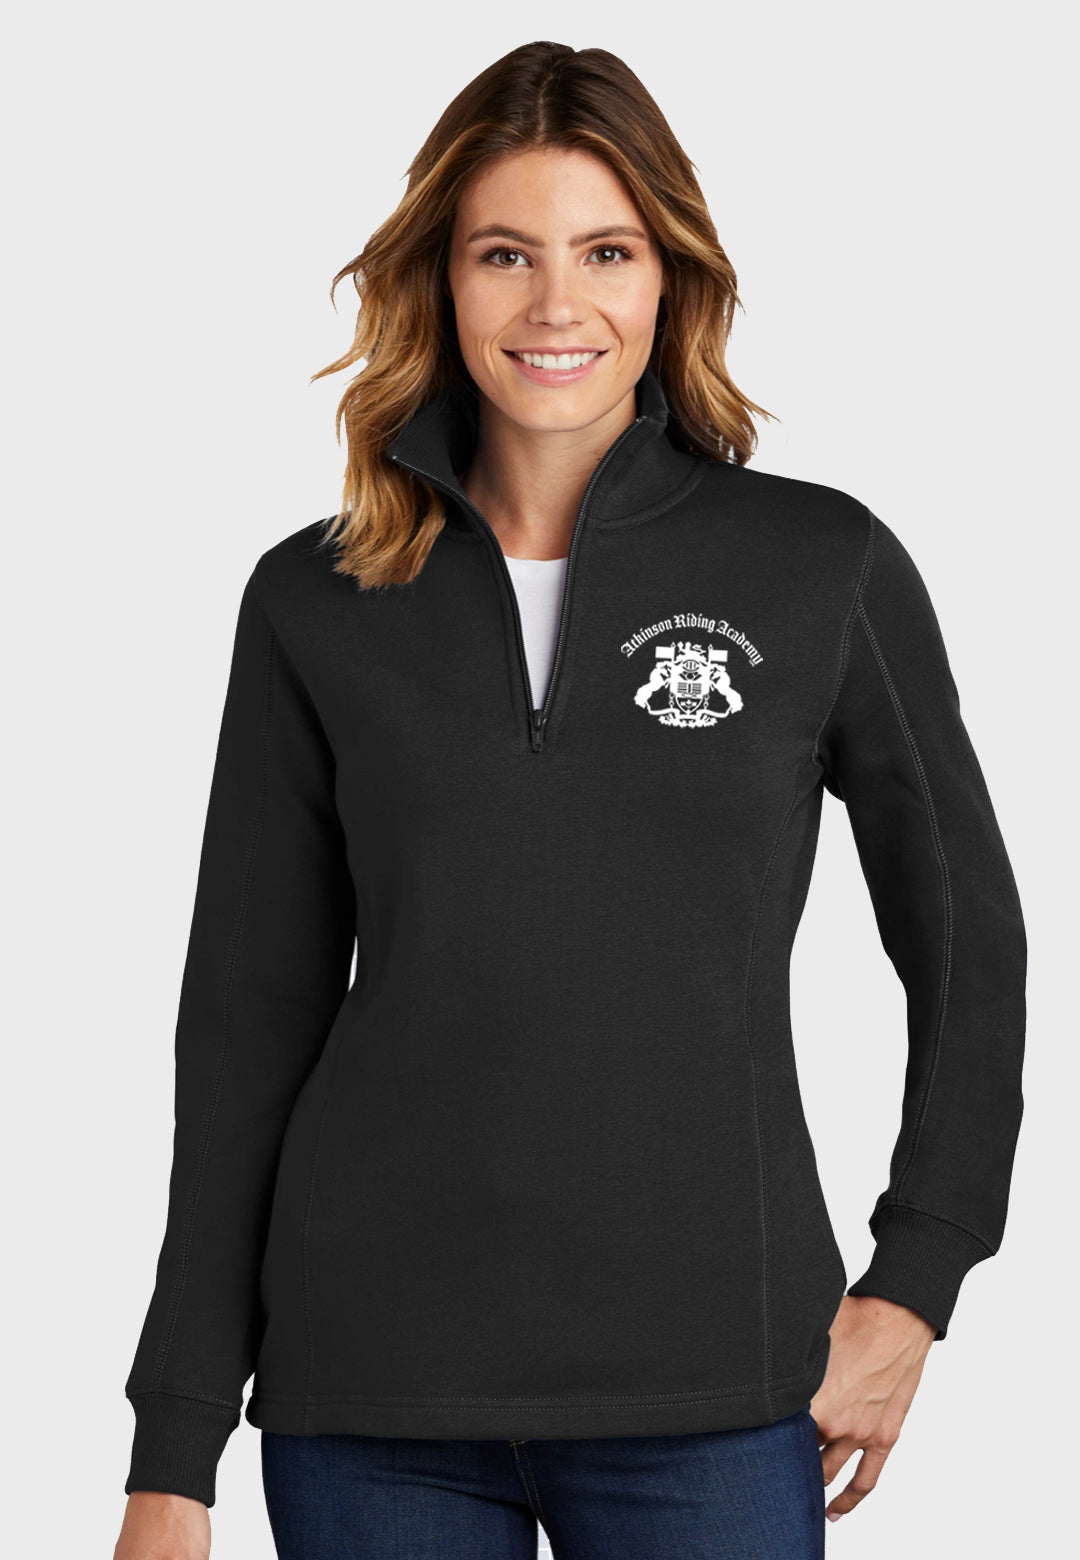 Atkinson Riding Academy Sport-Tek® Ladies 1/4-Zip Sweatshirt - Multiple Color Options